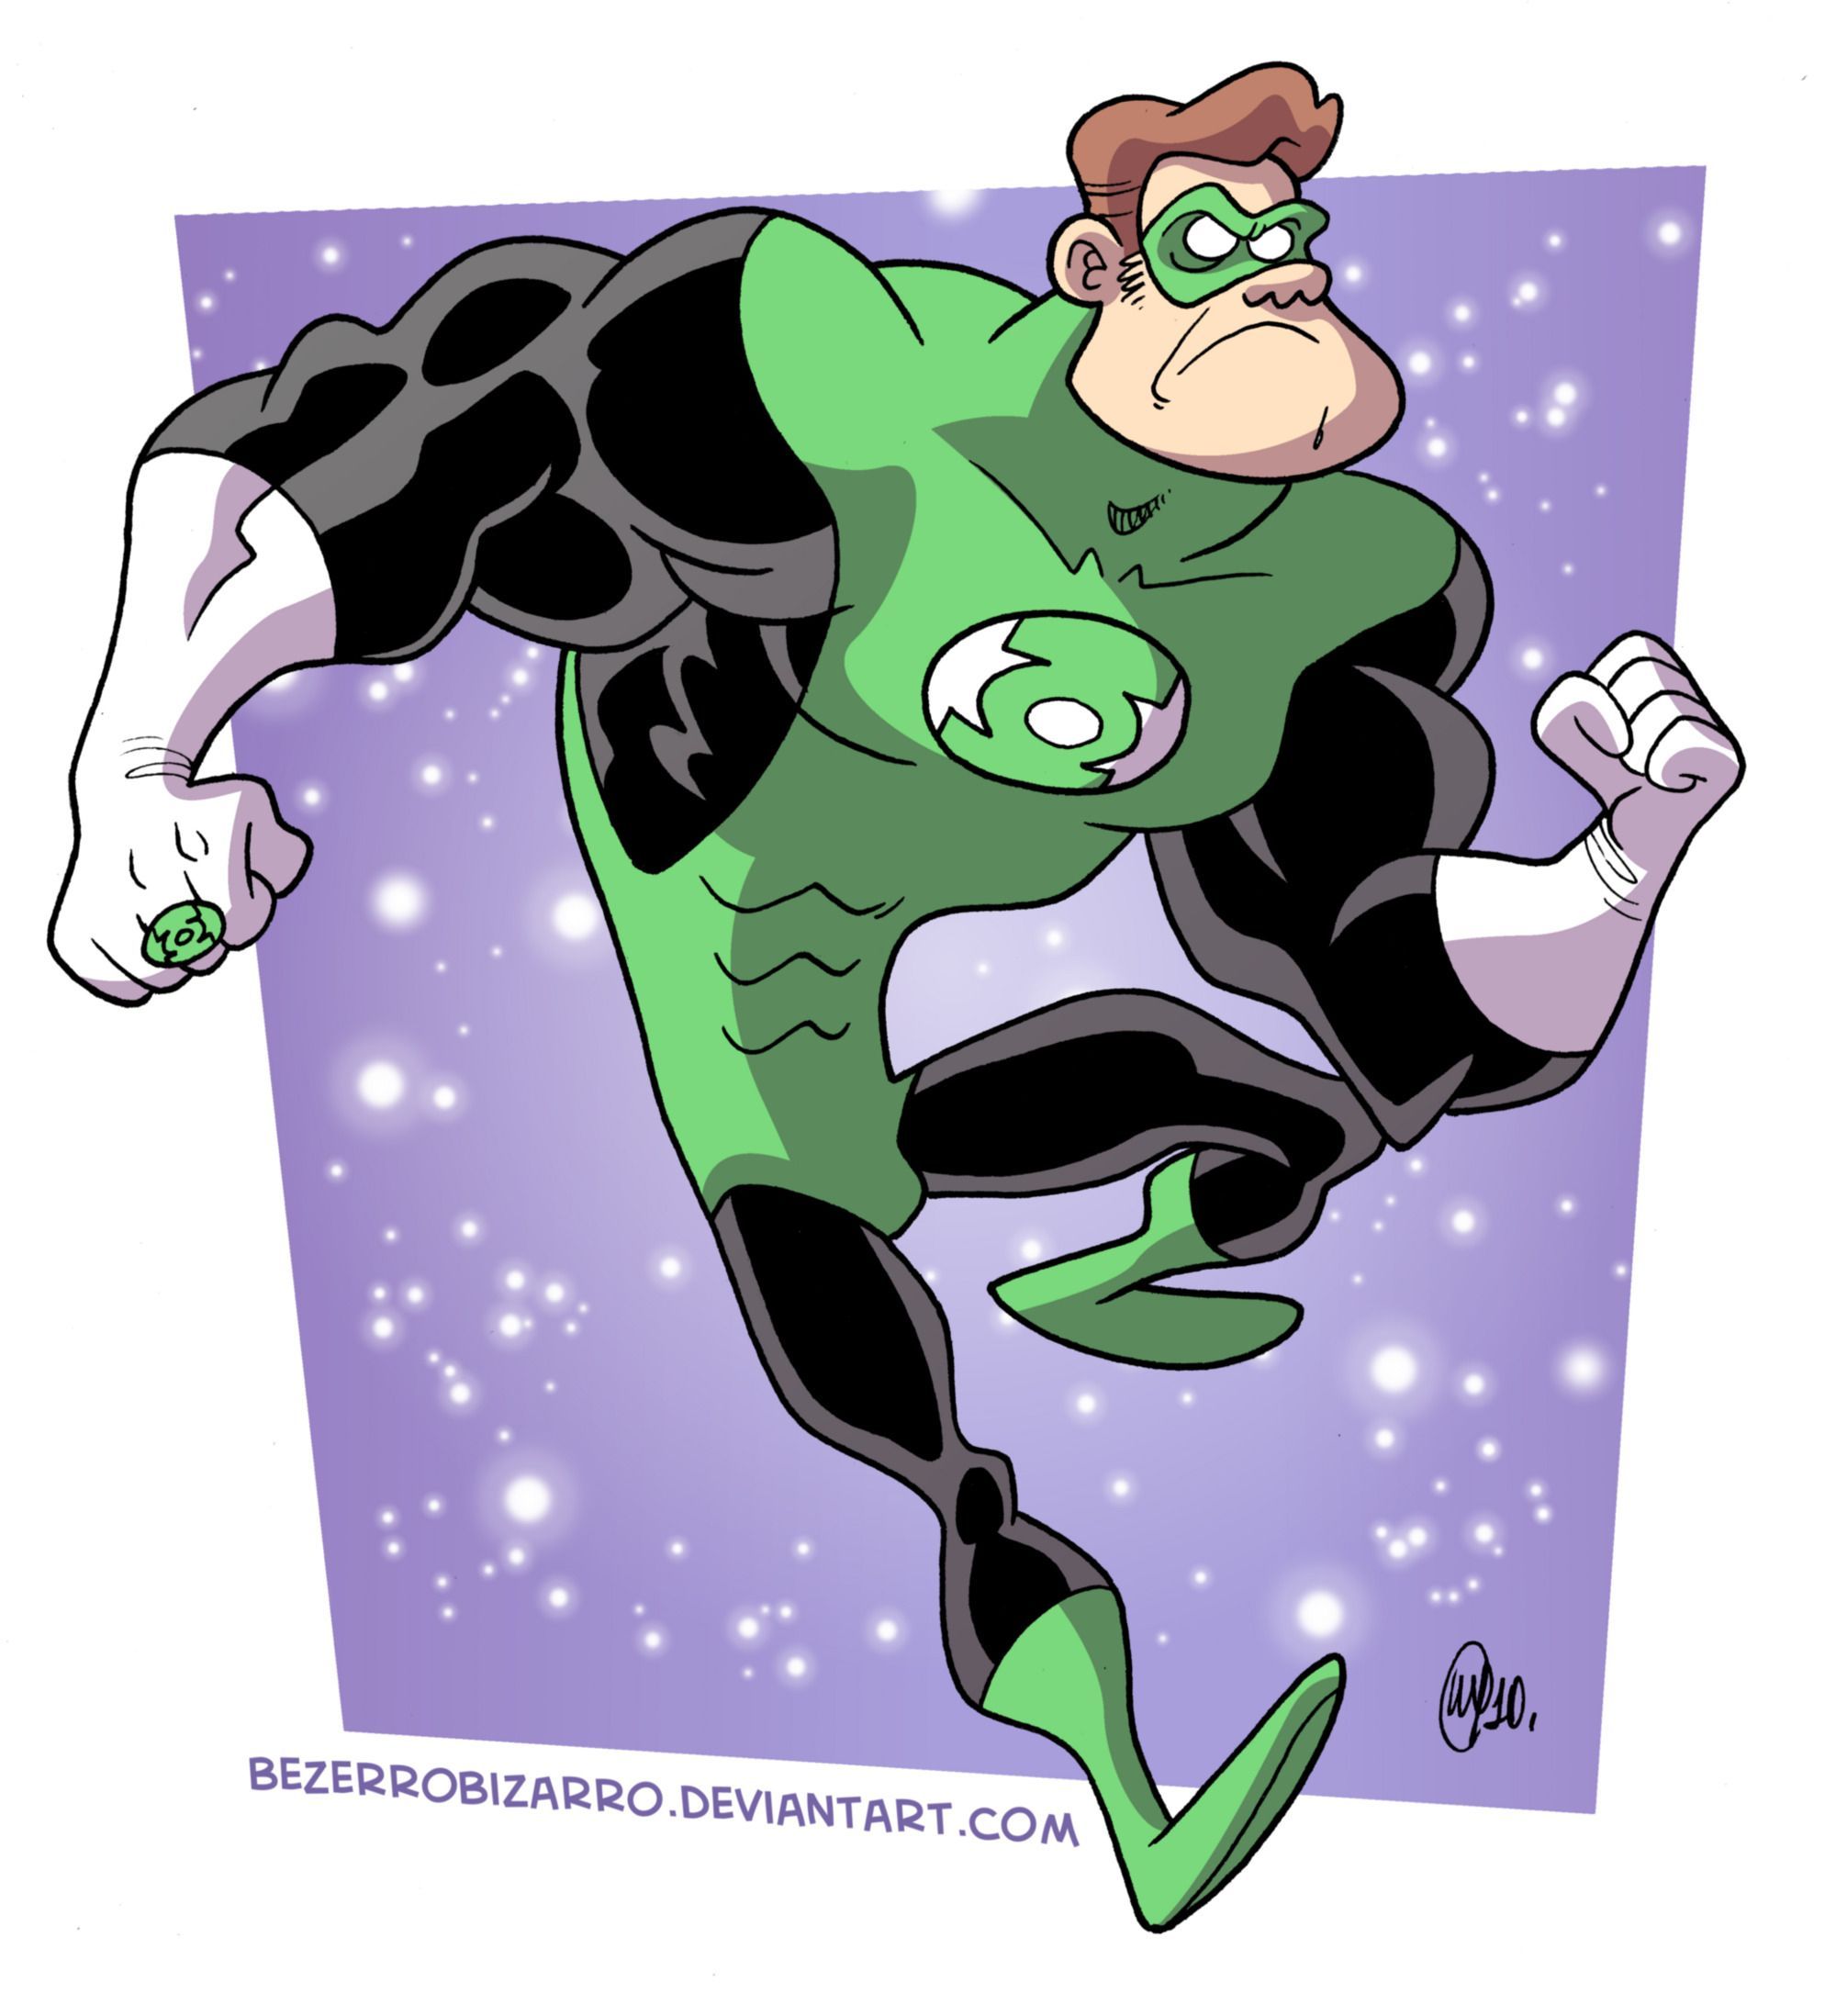 27 portraits Cartoon de Super-héros Marvel et DC #15